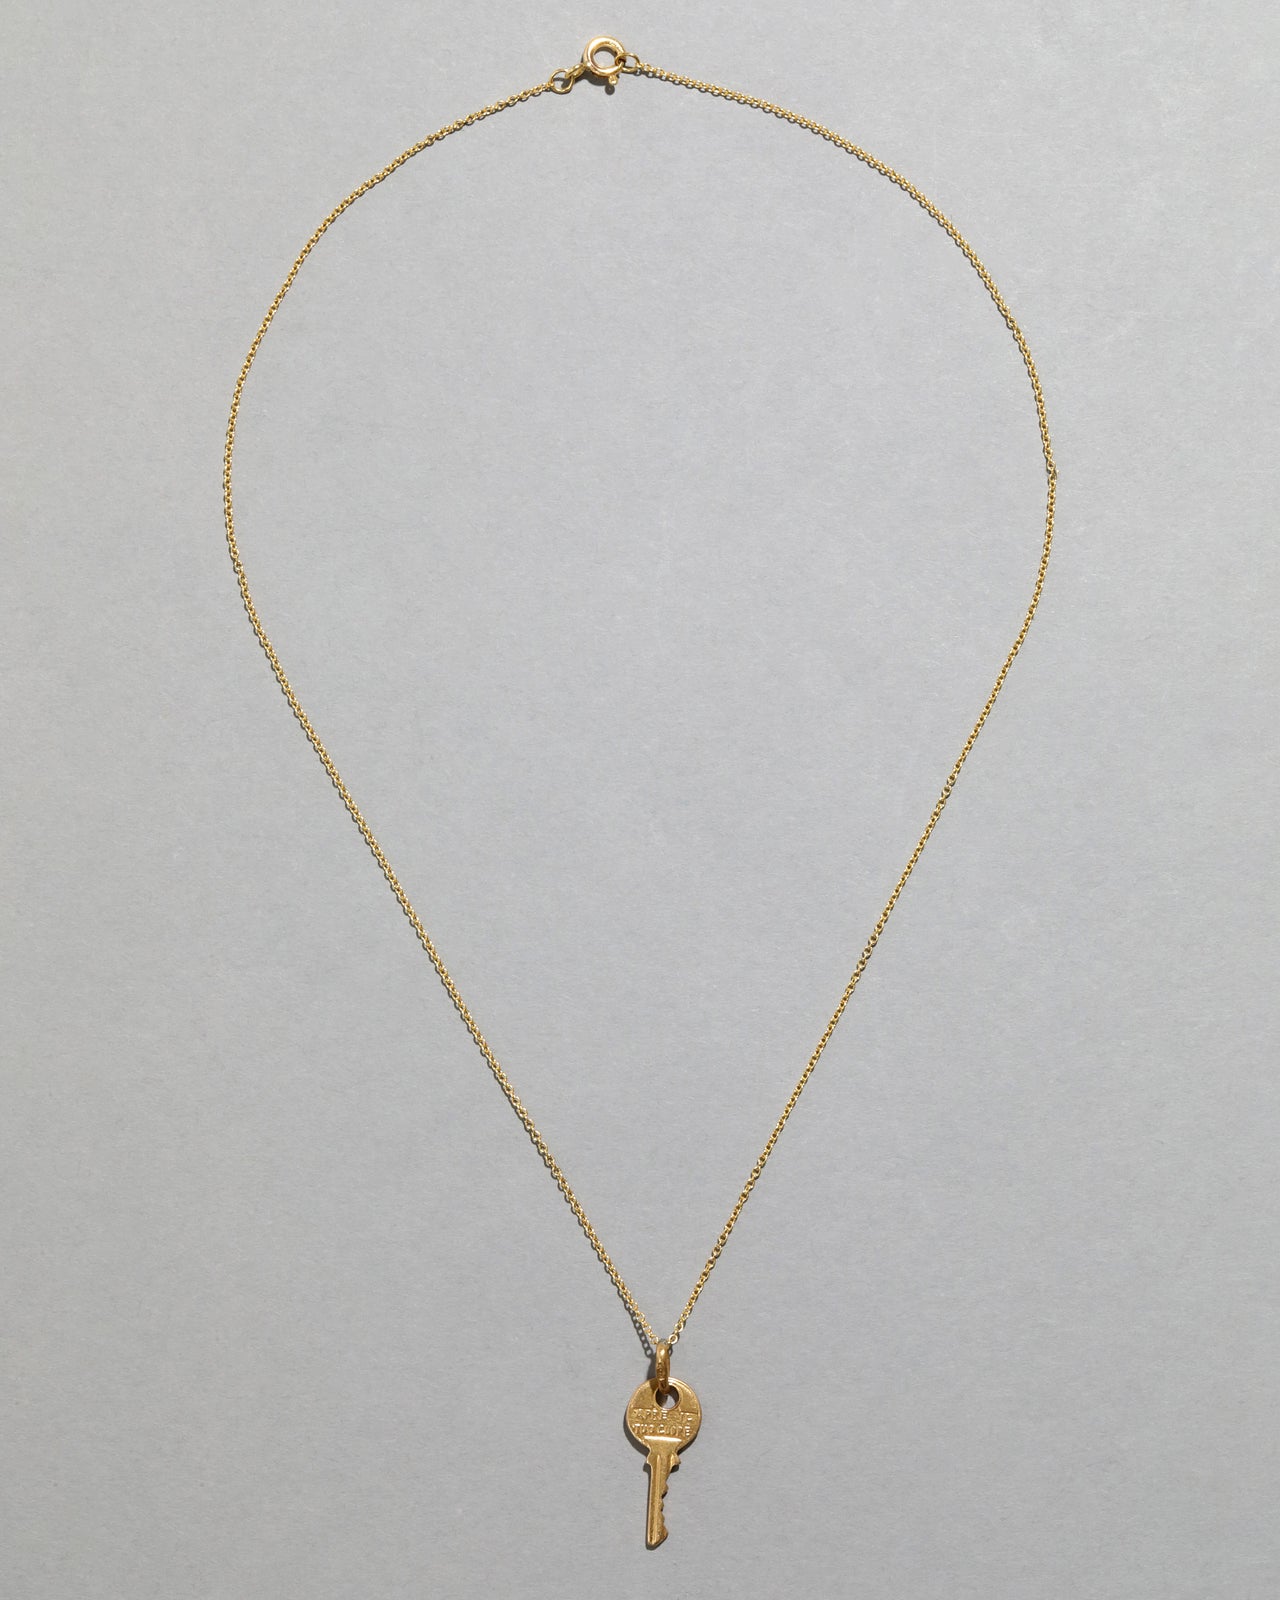 Vintage 1970s 18k Gold Key Pendant Necklace - Photo 2